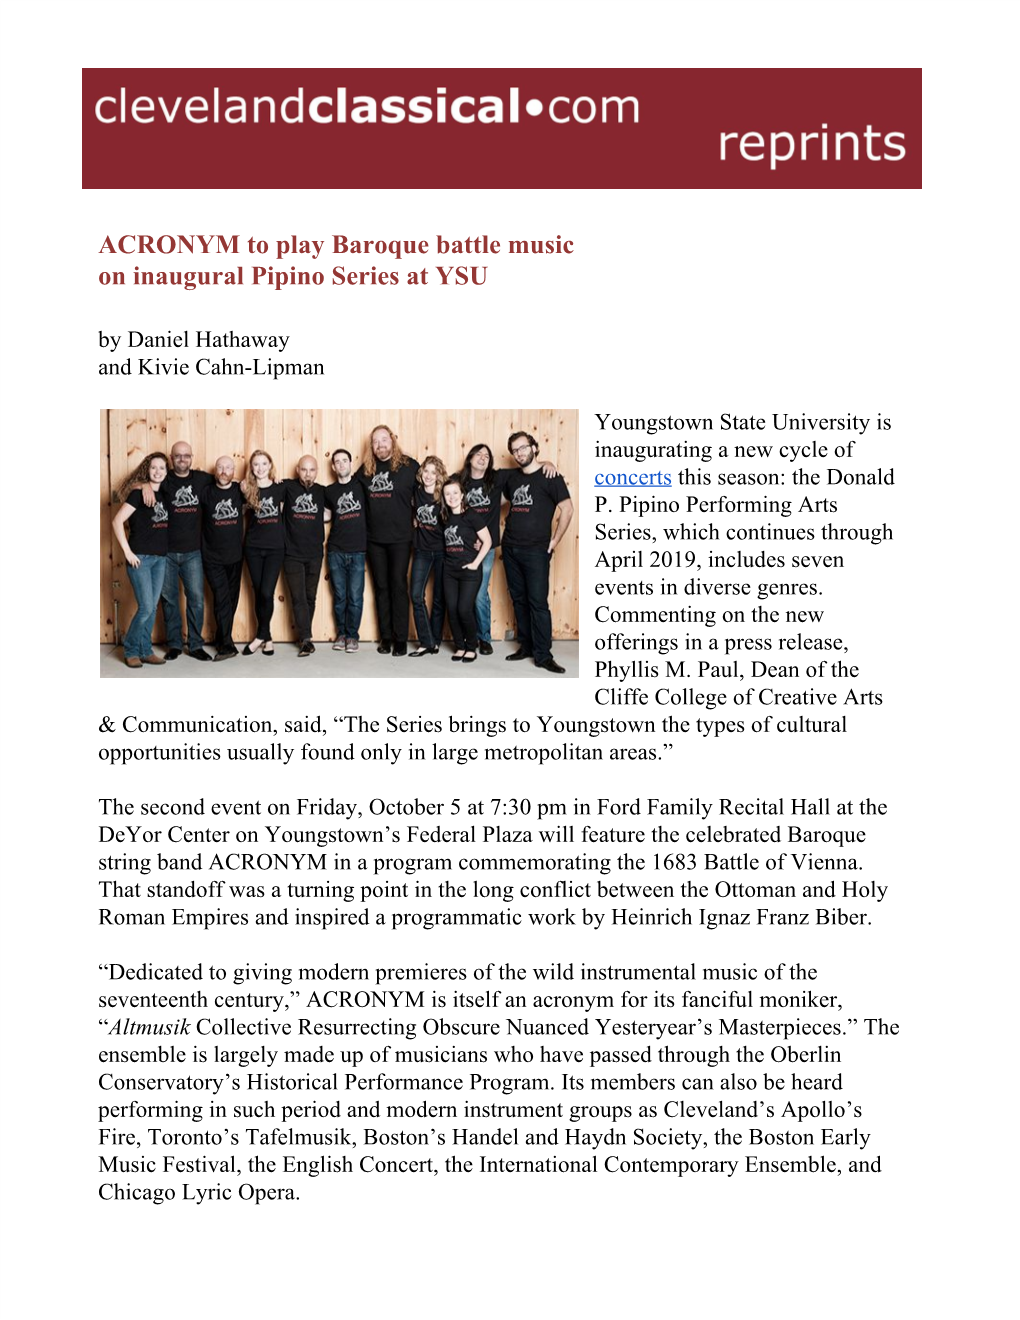 ACRONYM to Play Baroque Battle Music on Inaugural Pipino Series at YSU by Daniel Hathaway and Kivie Cahn-Lipman